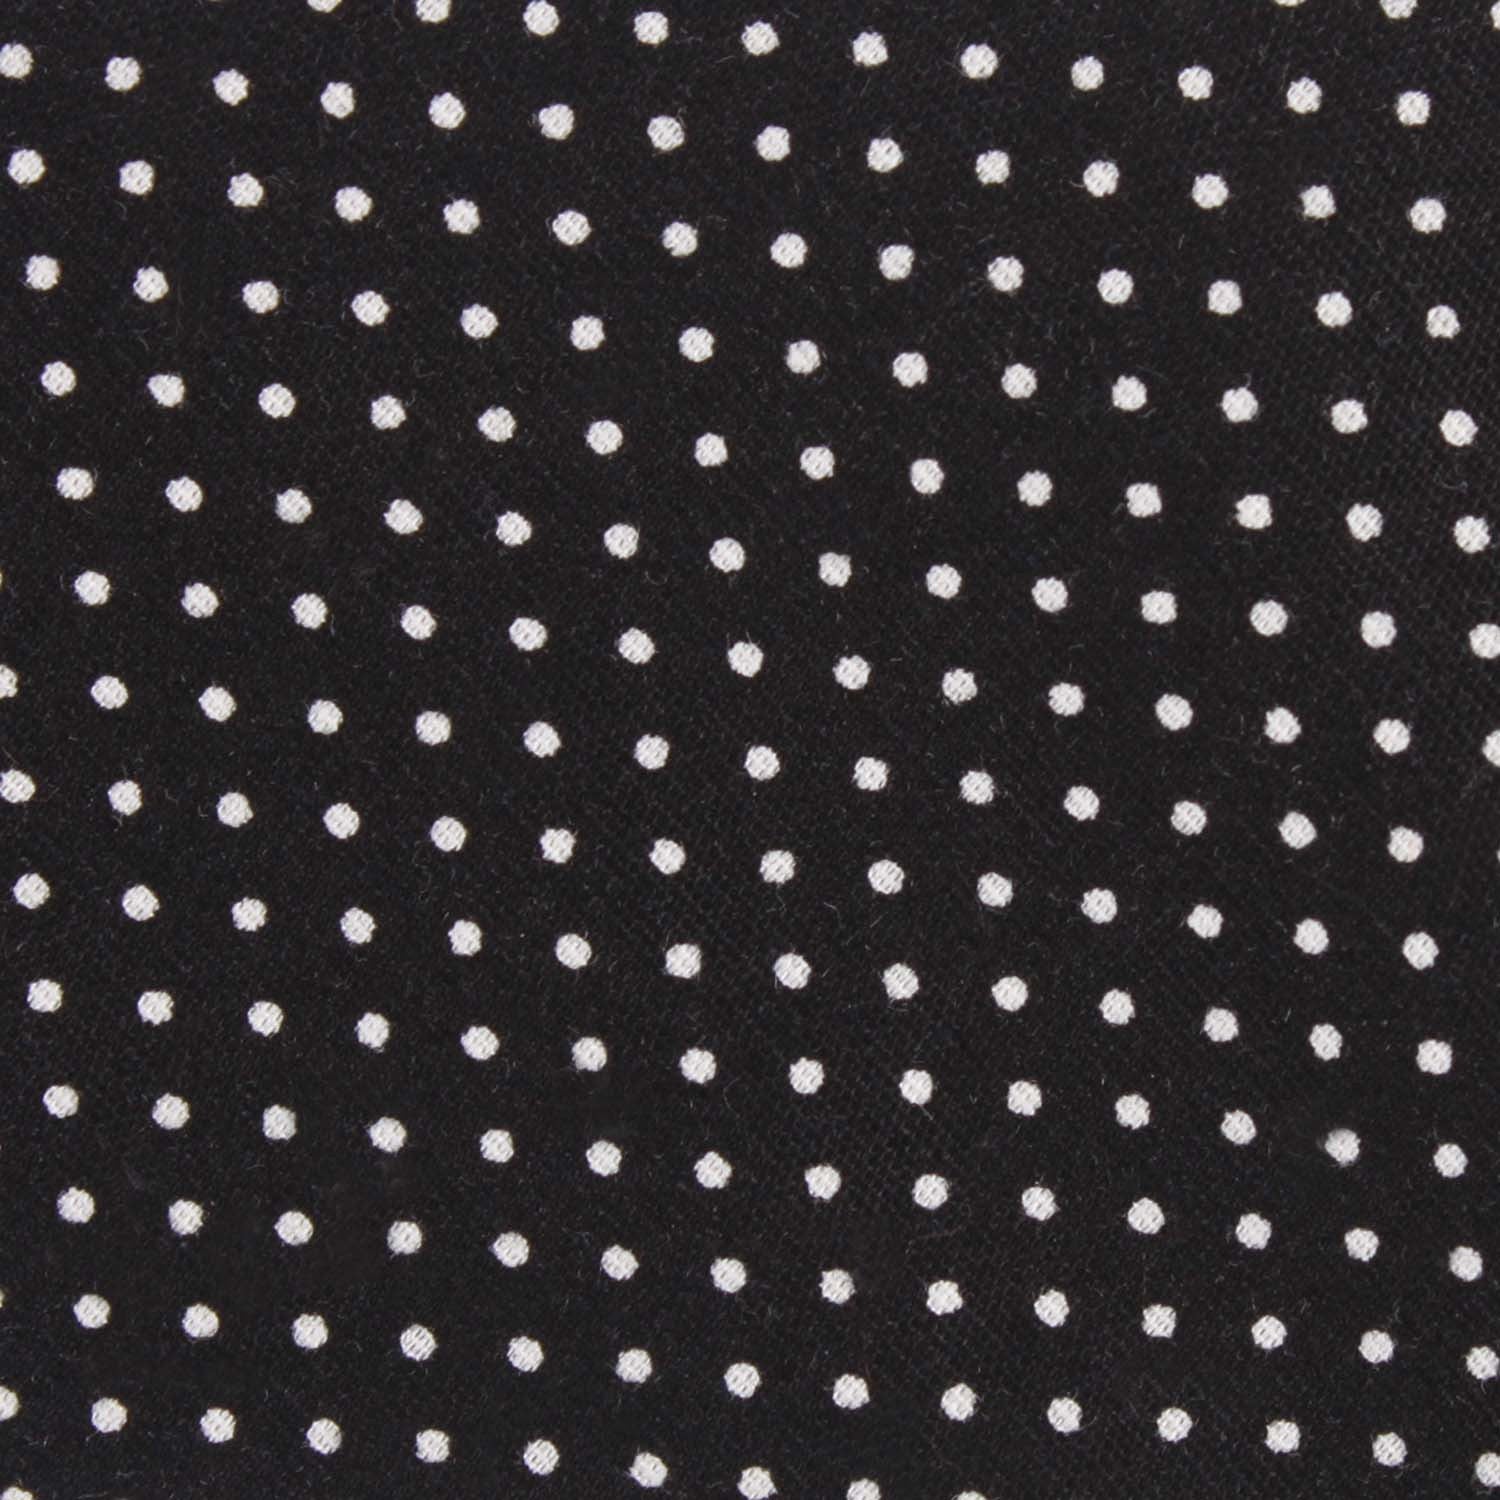 Black Cotton with Mini White Polka Dots Fabric Pocket Square C155